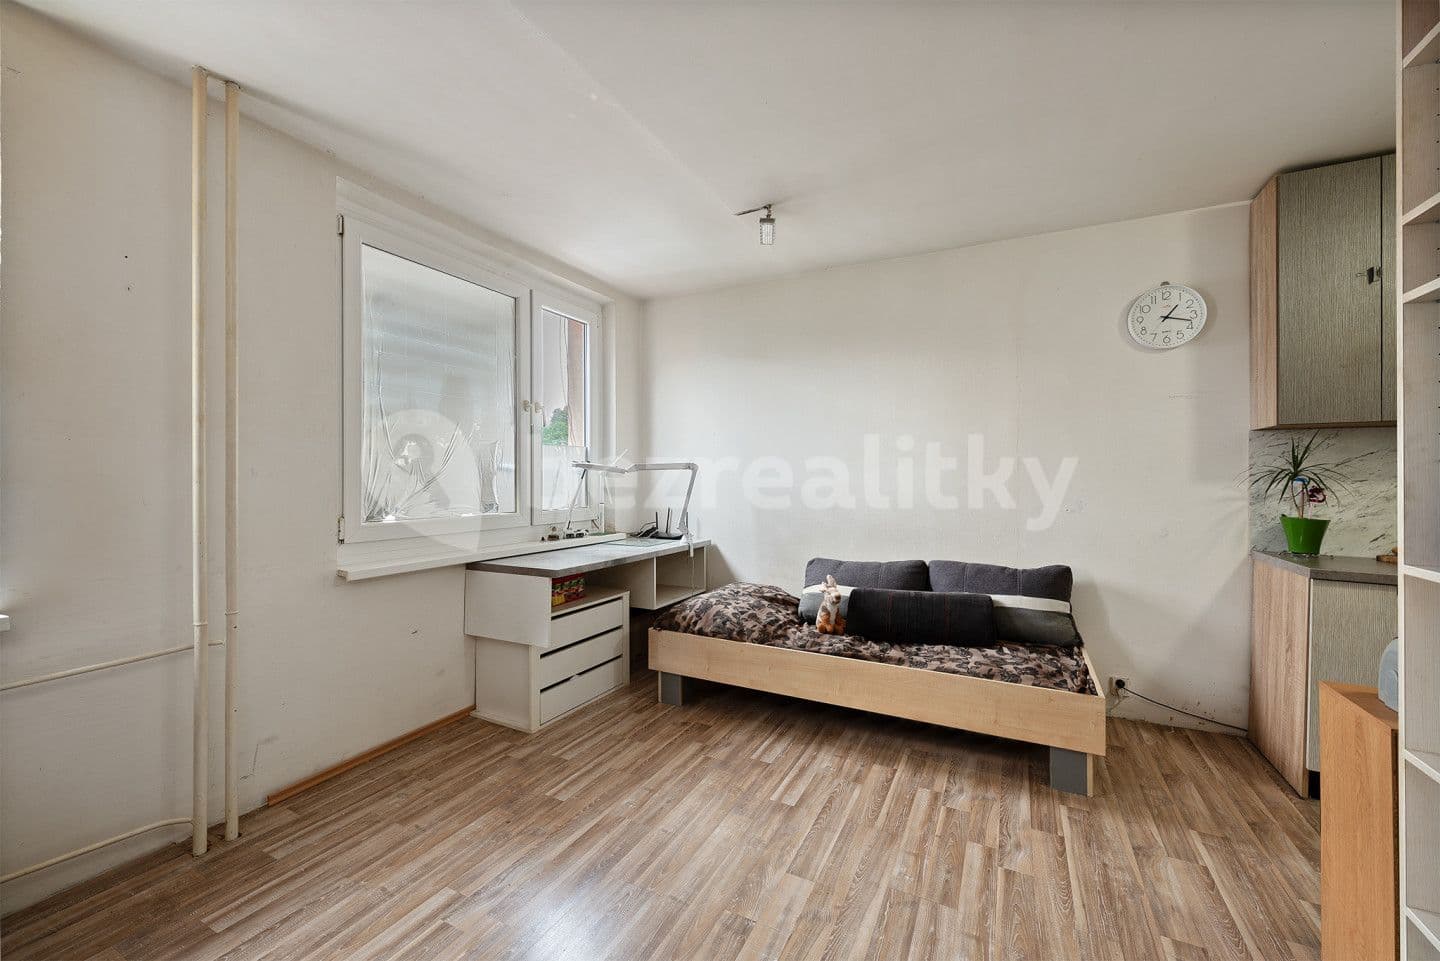 Studio flat for sale, 33 m², Krajní, Teplice, Ústecký Region